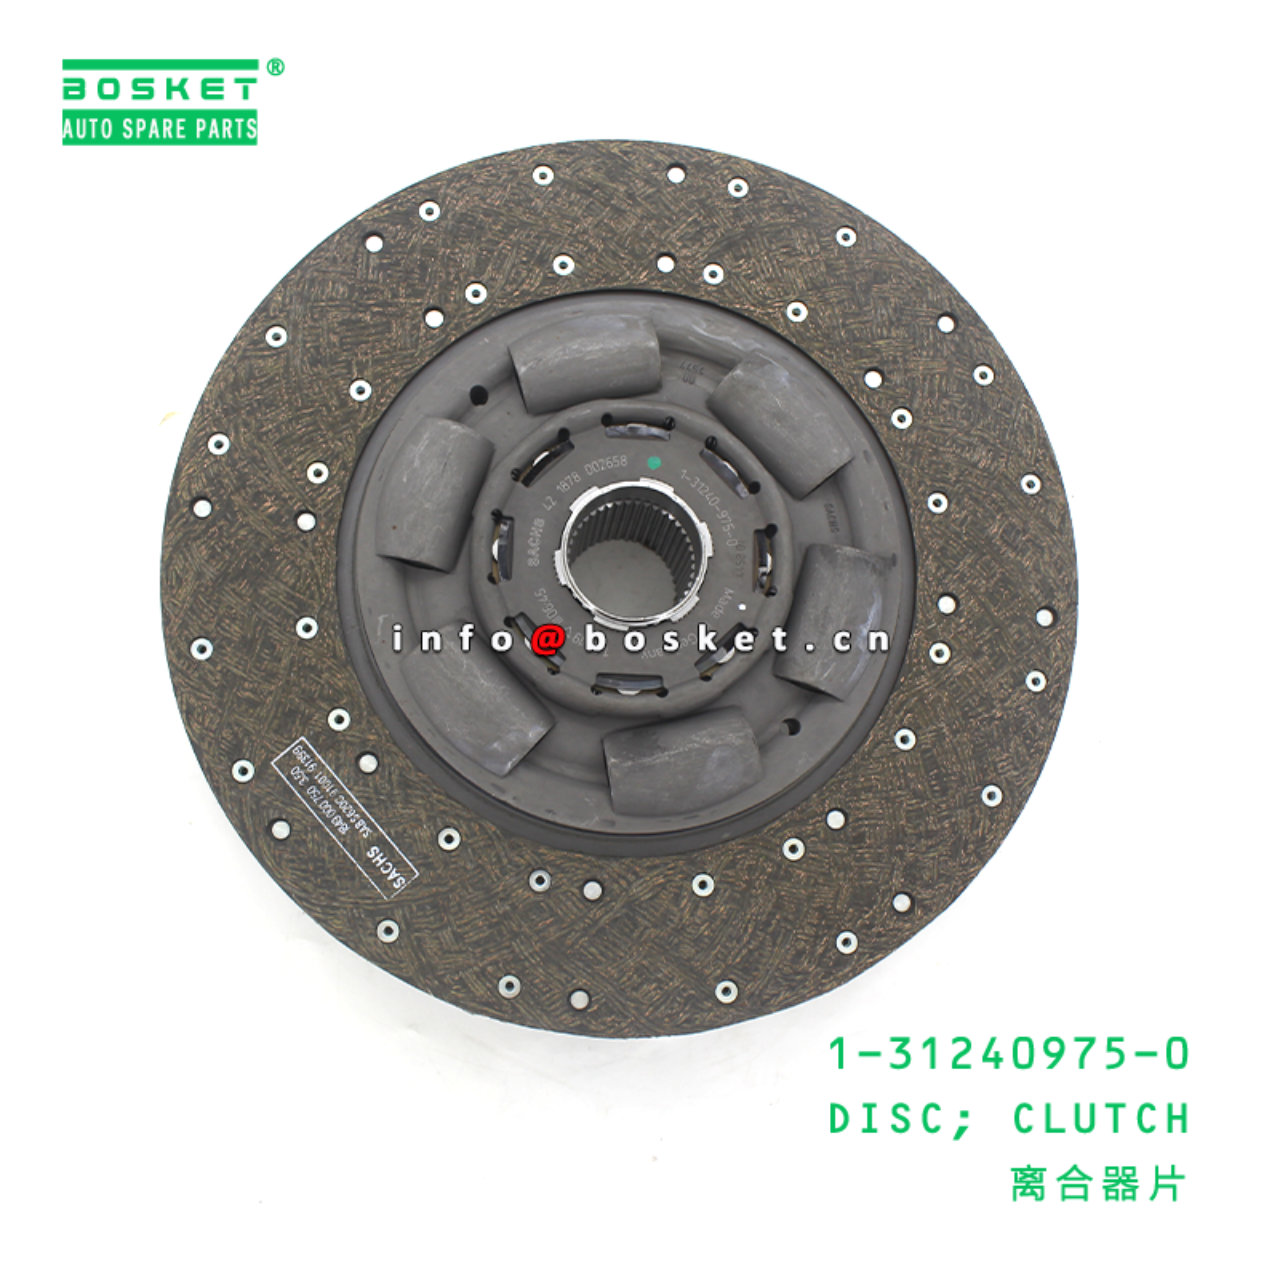  1-31240975-0 Clutch Disc 1312409750 Suitable for ISUZU CYZ EXZ